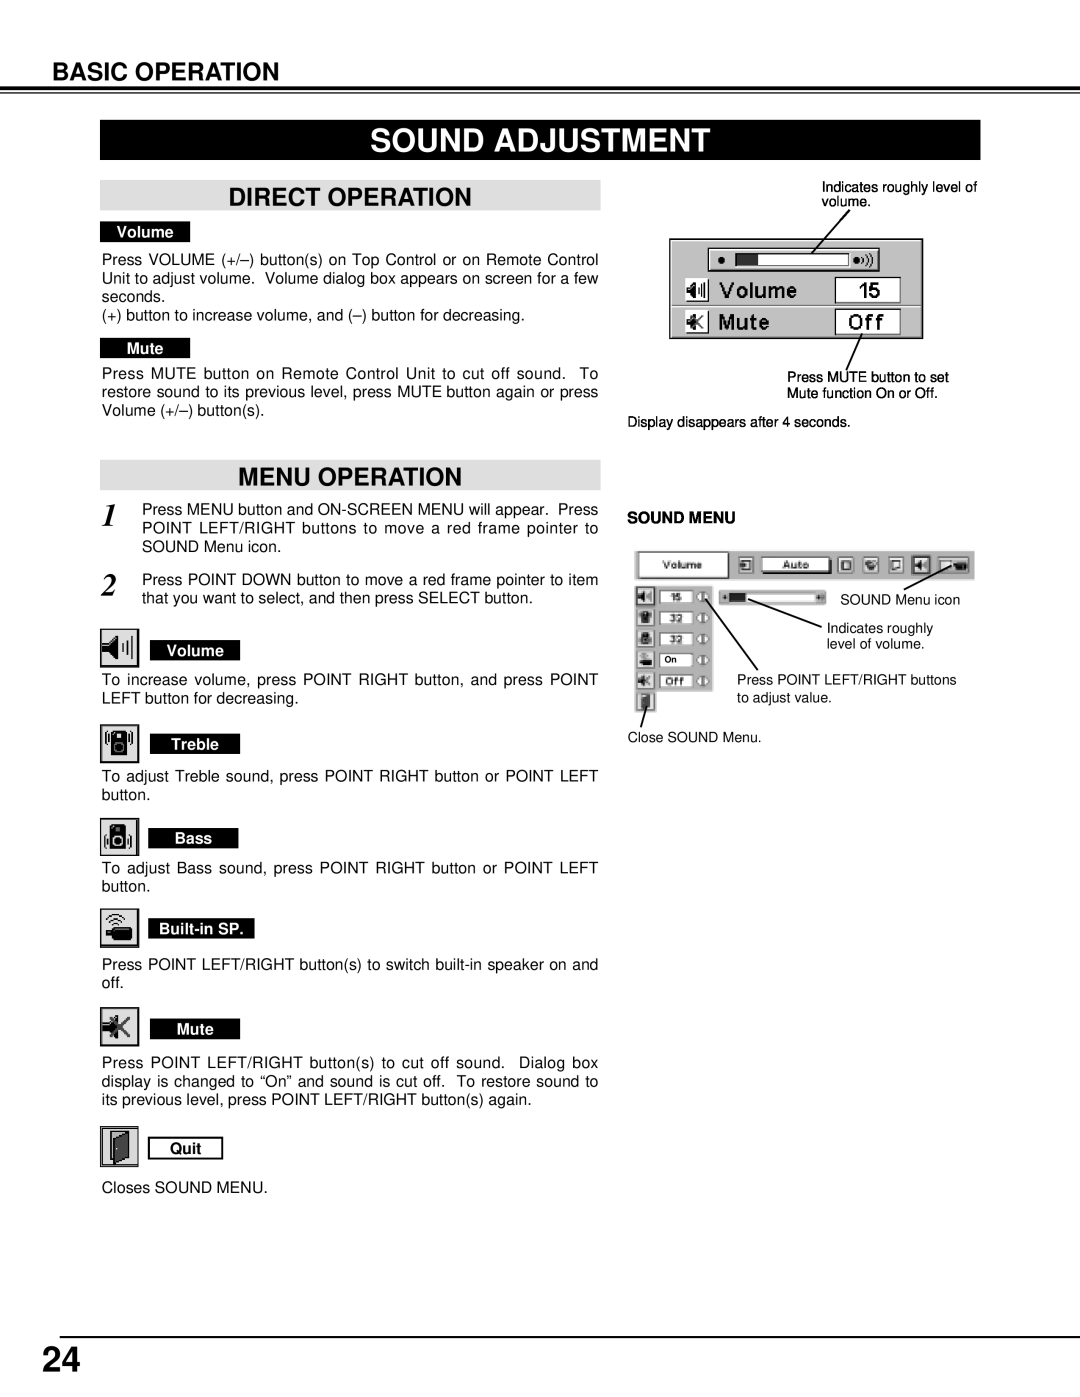 Christie Digital Systems 38-VIV301-01 user manual Sound Adjustment, Direct Operation, Menu Operation, Basic Operation, Quit 